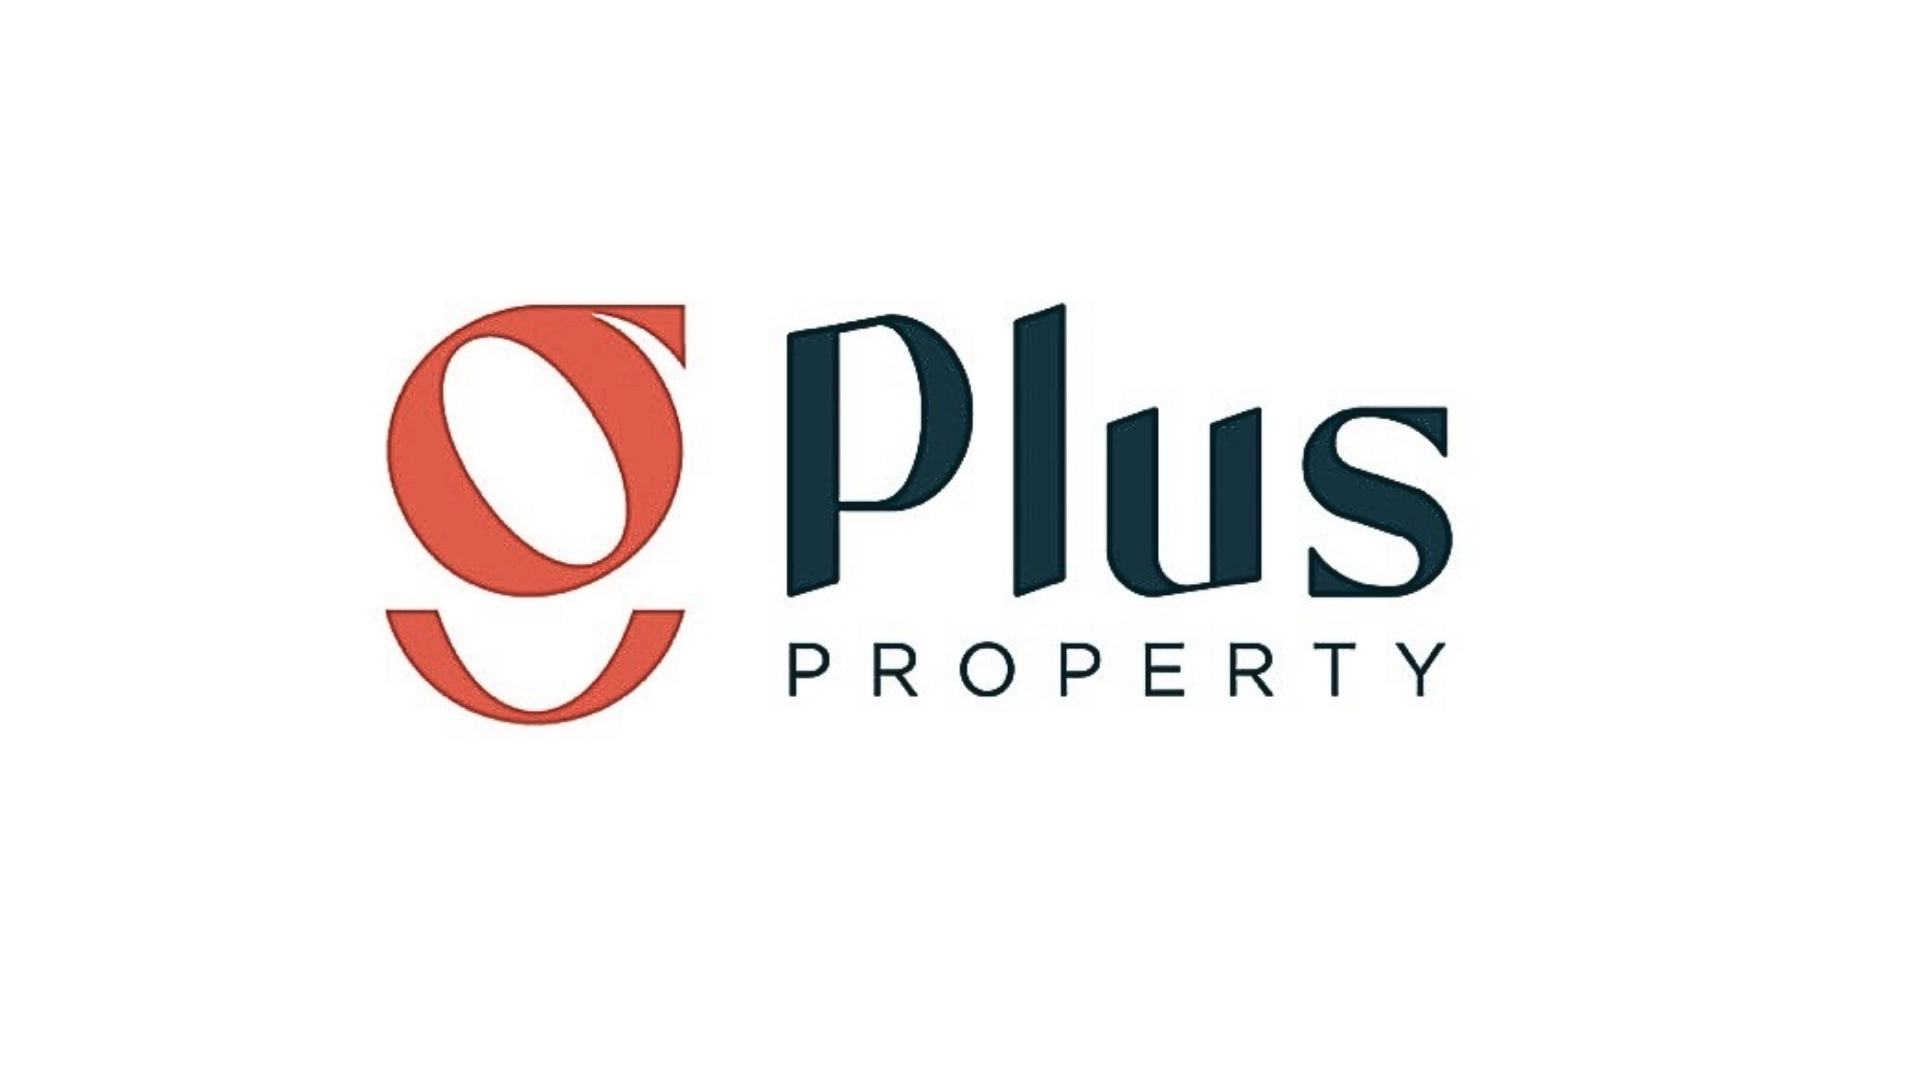 g plus property